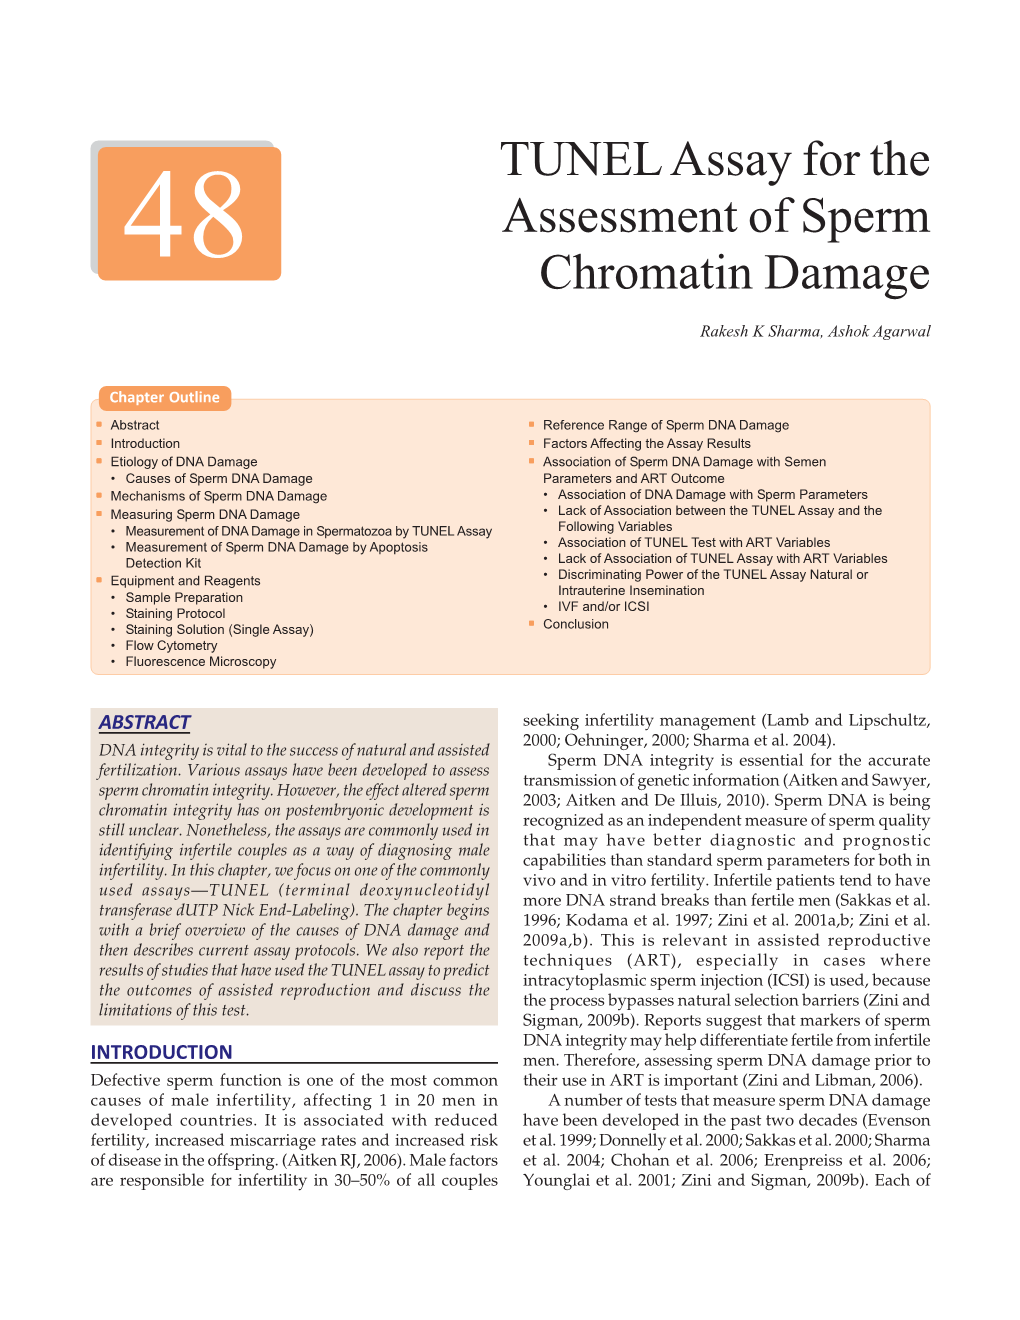 TUNEL Assay for the Assessment of Sperm Chromatin Damage 467